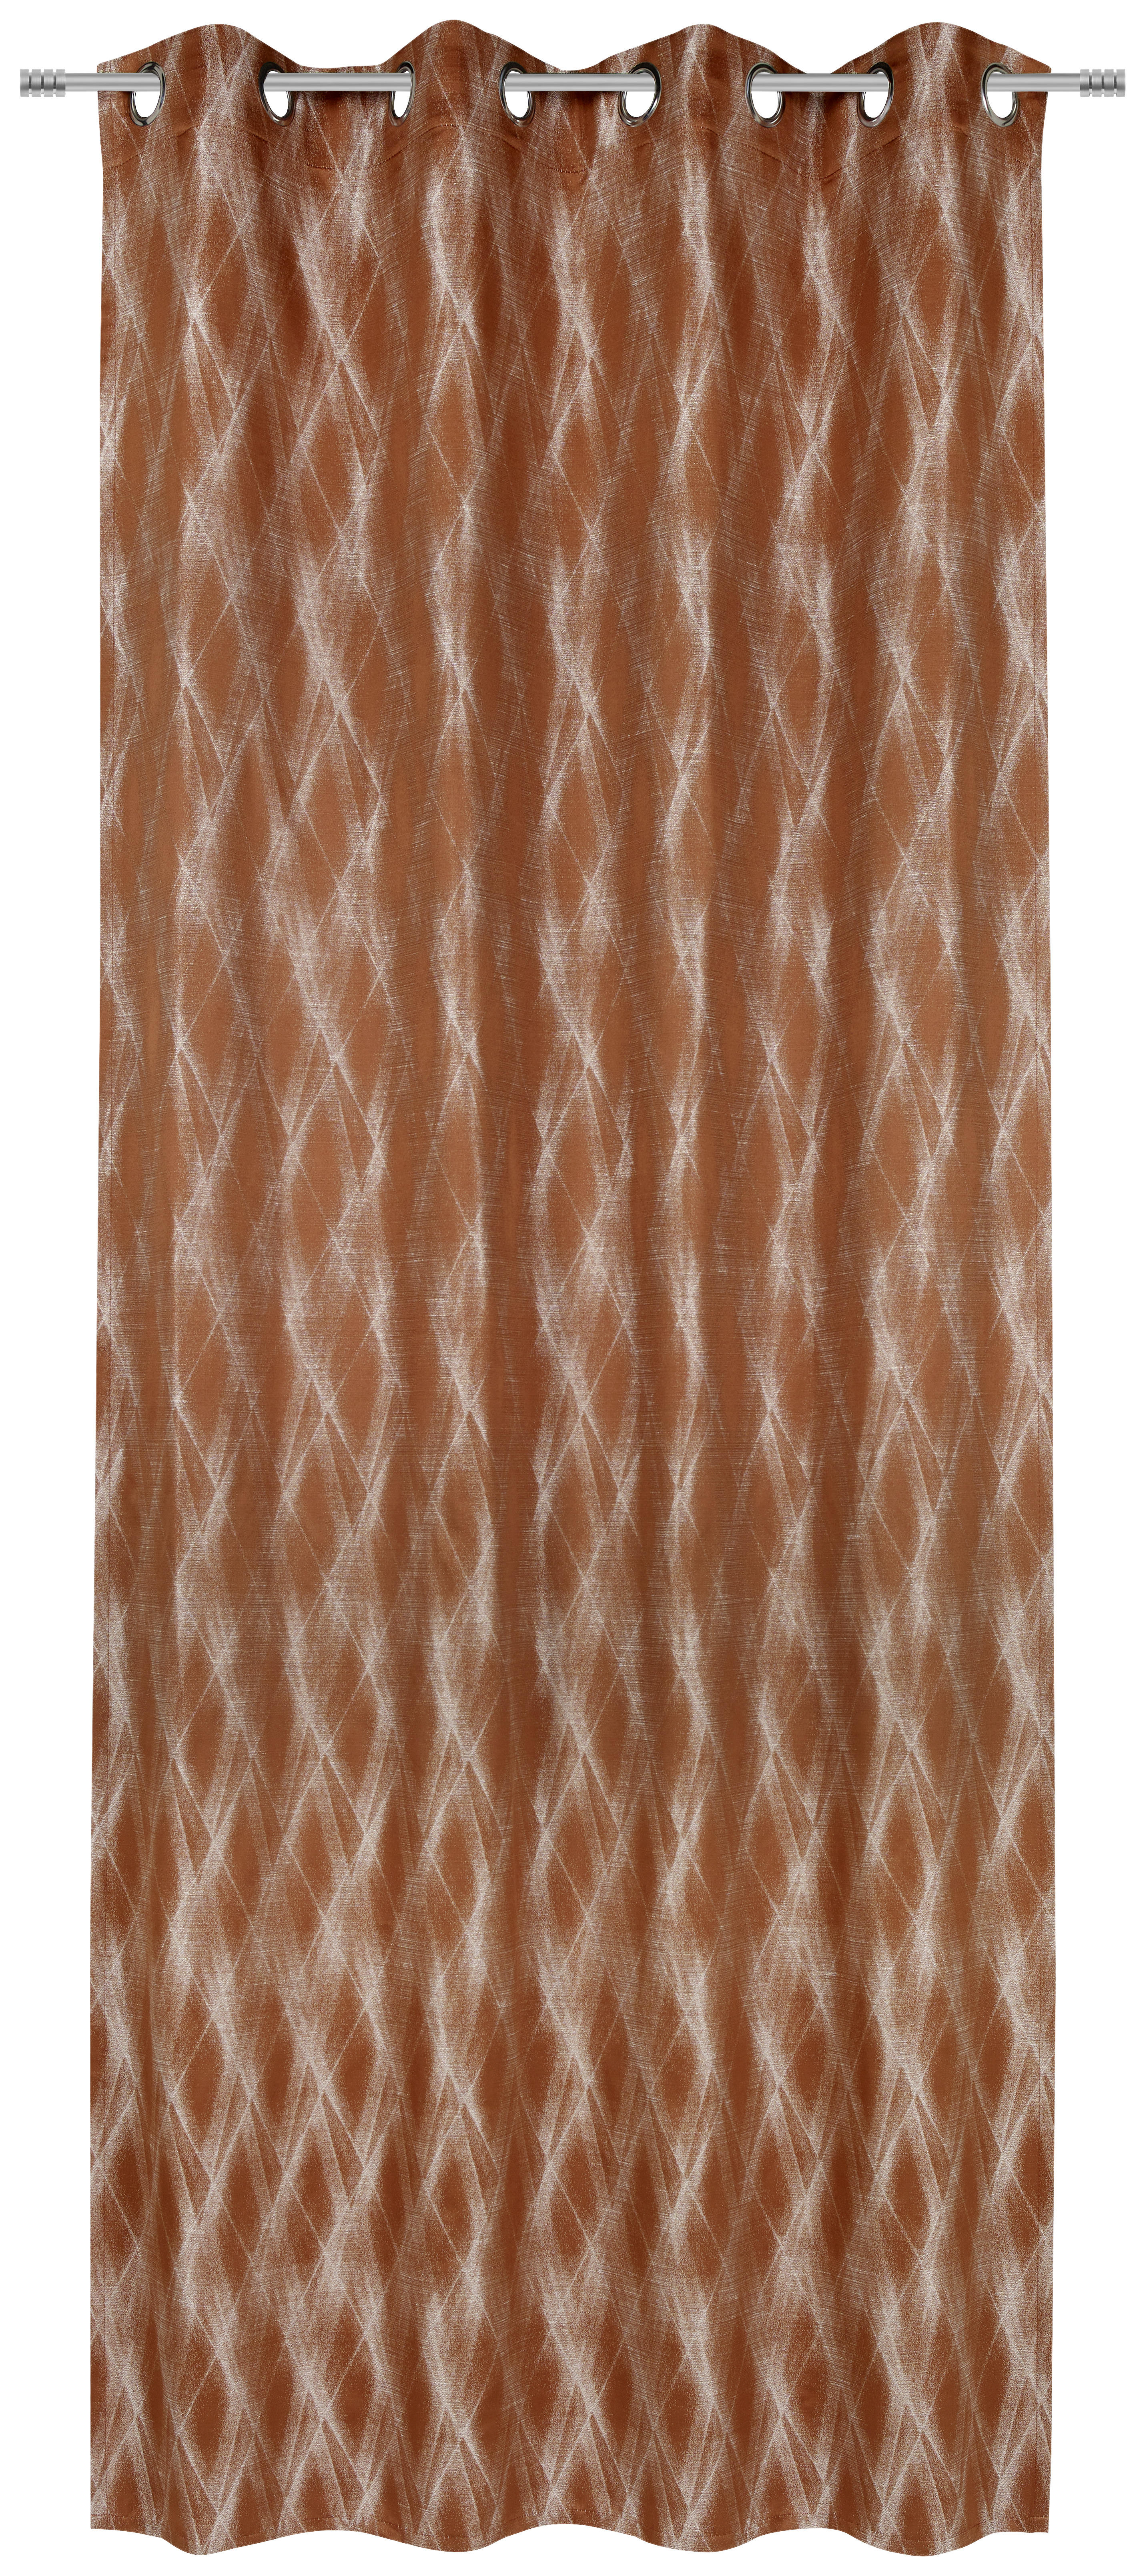 ÖSENSCHAL Narvik blickdicht 135/250 cm   - Beige/Terra cotta, Design, Textil (135/250cm) - Ambiente